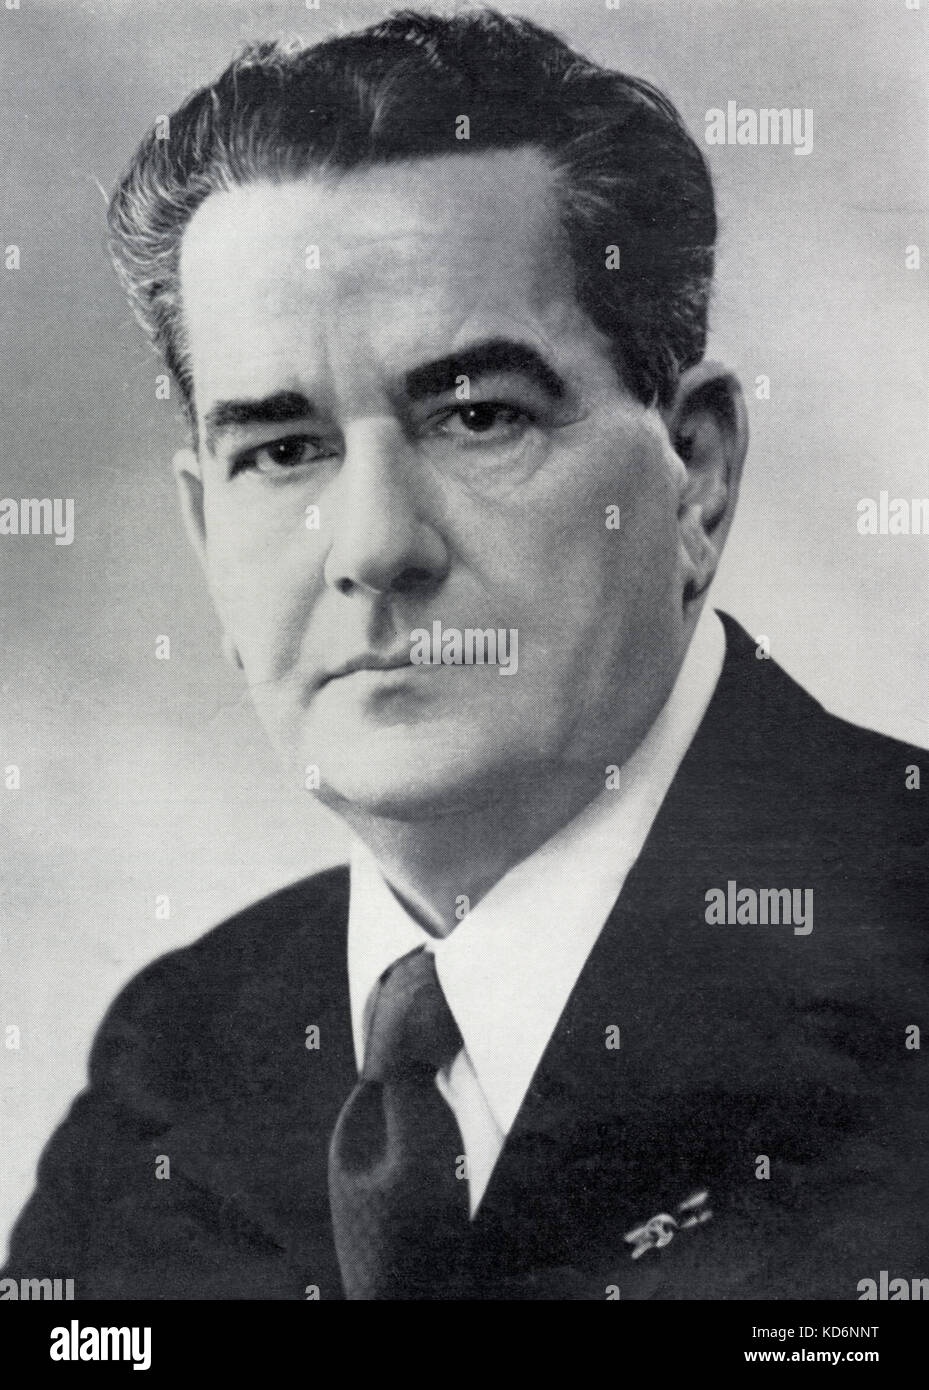 Eduard Van Beinum, Portrait. Der niederländische Dirigent 3 September 1900 - 13. April 1959 Stockfoto